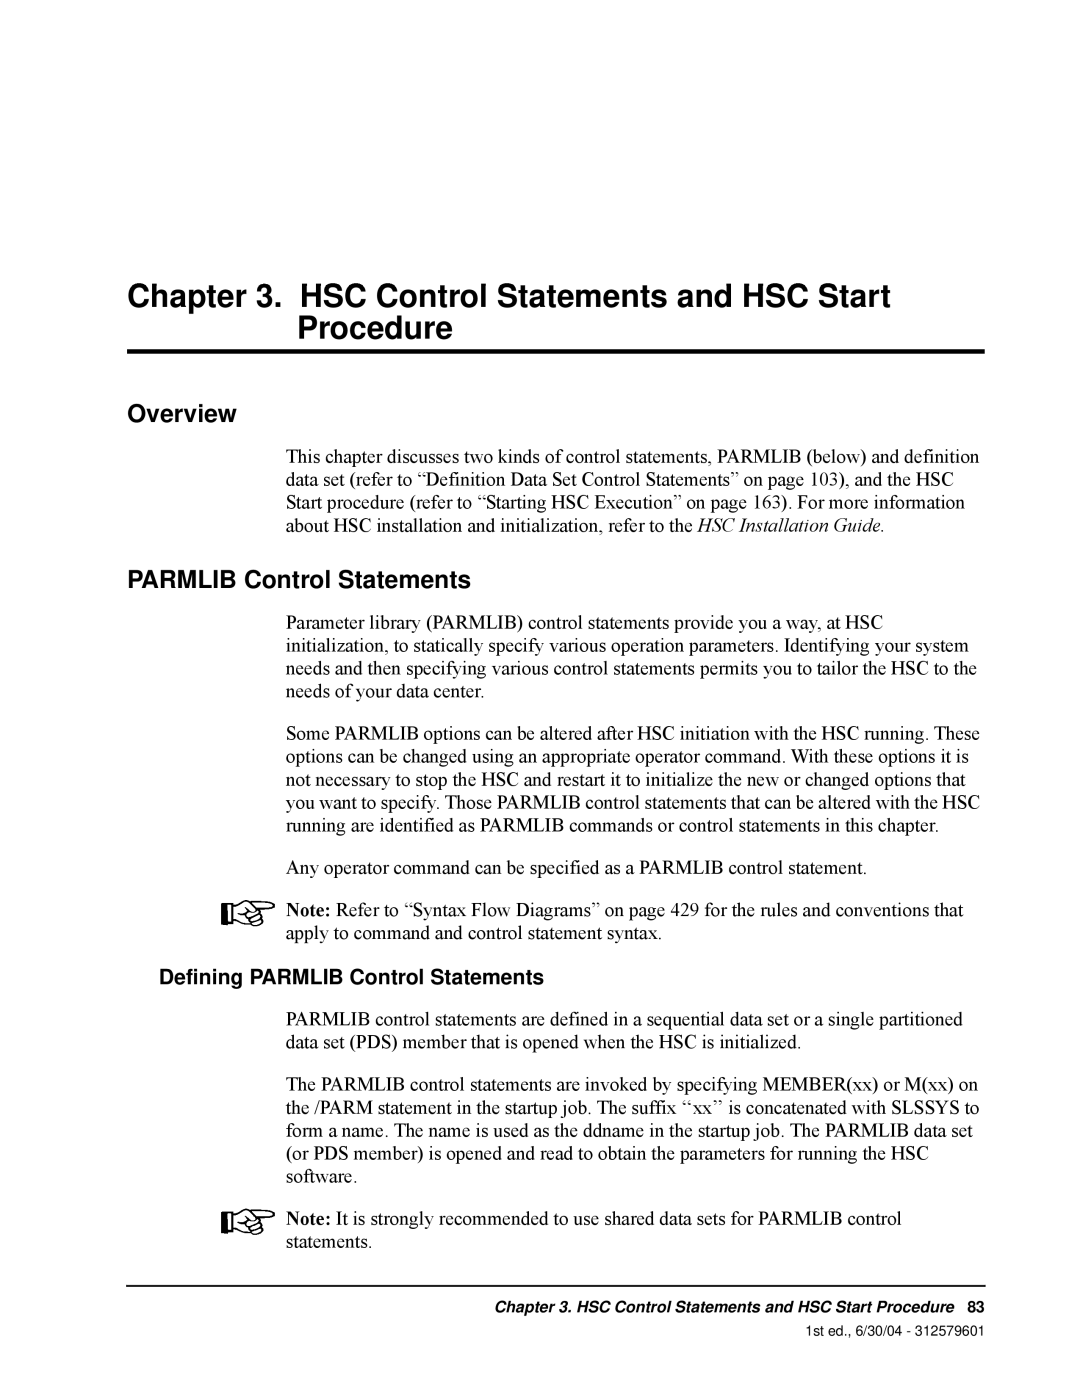 StorageTek 6 manual Overview, Defining PARMLIB Control Statements 